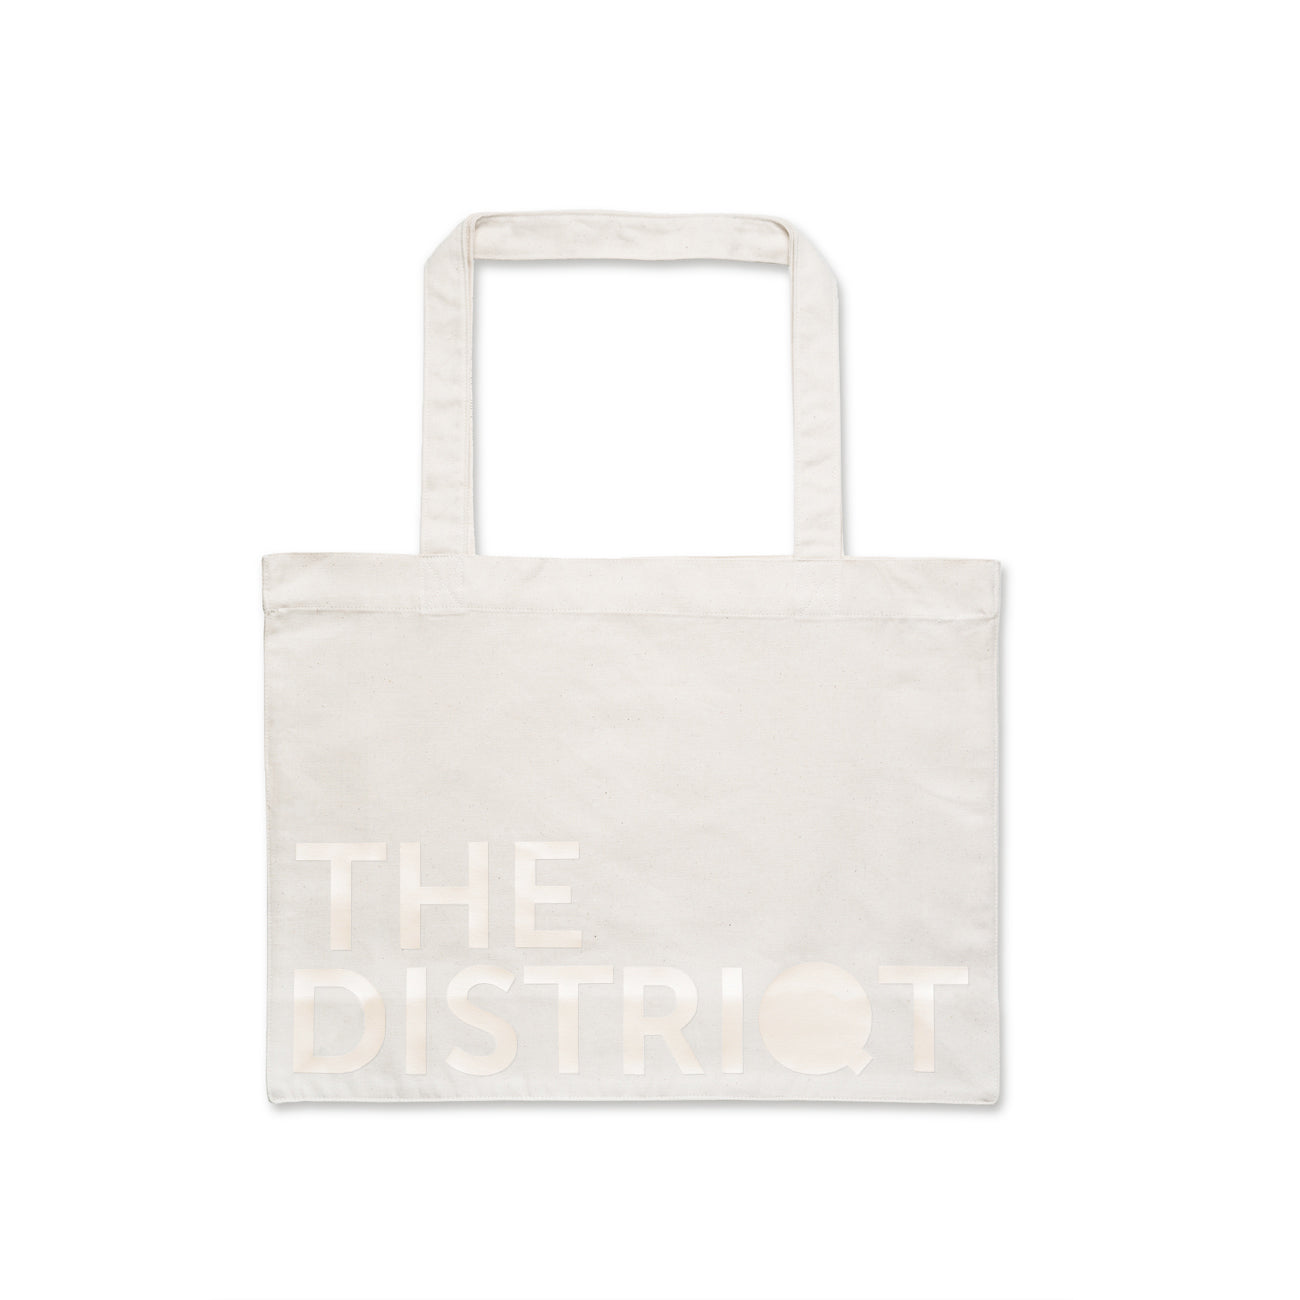 THE DISTRIQT BAG